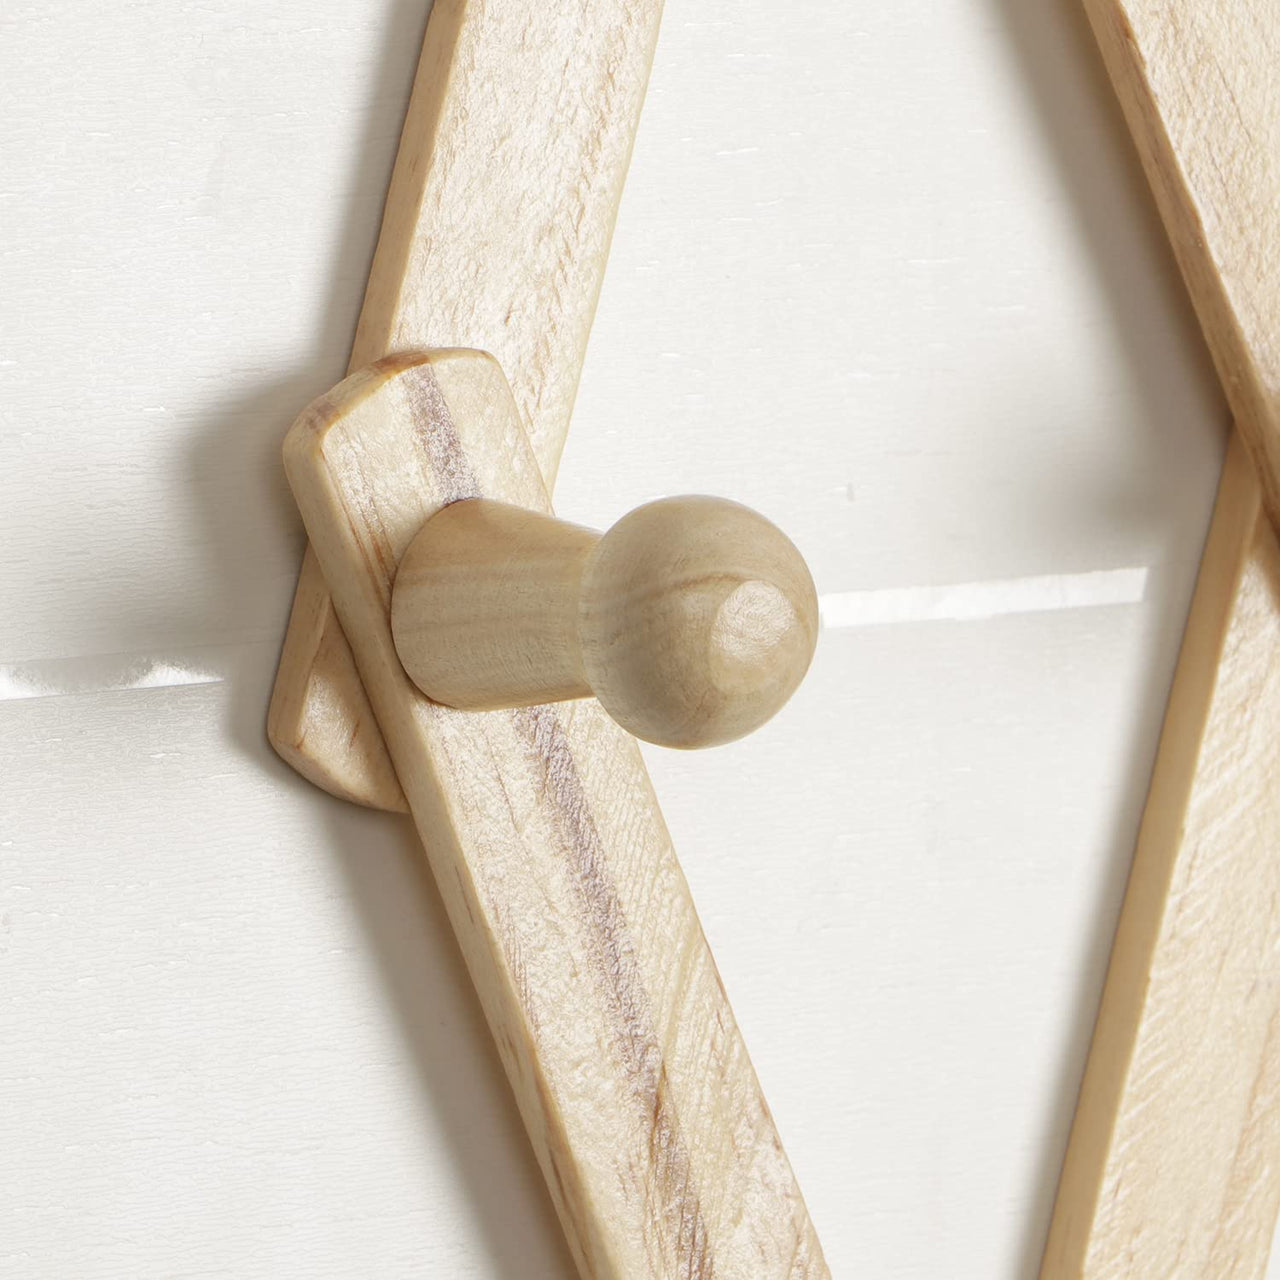 Wooden Expandable Peg Rack Wall Hanger Hooks for Cloths Key & Bathroom Hanger Home Decoration Dime Store